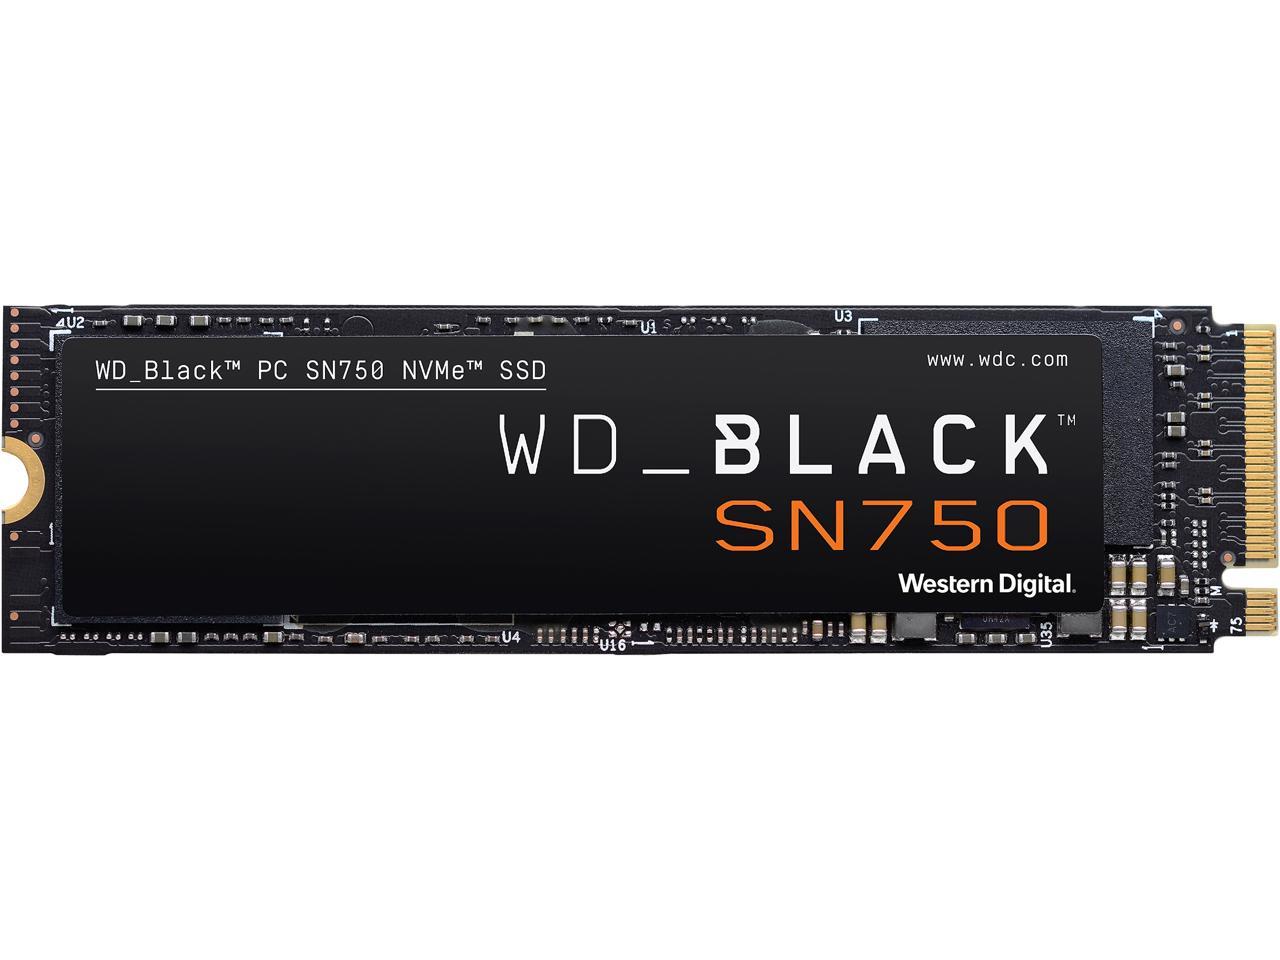 500GB Western Digital WD BLACK SN750 NVMe M.2 2280 PCI-Express 3.0 x4 @ Newegg $51.99 AC